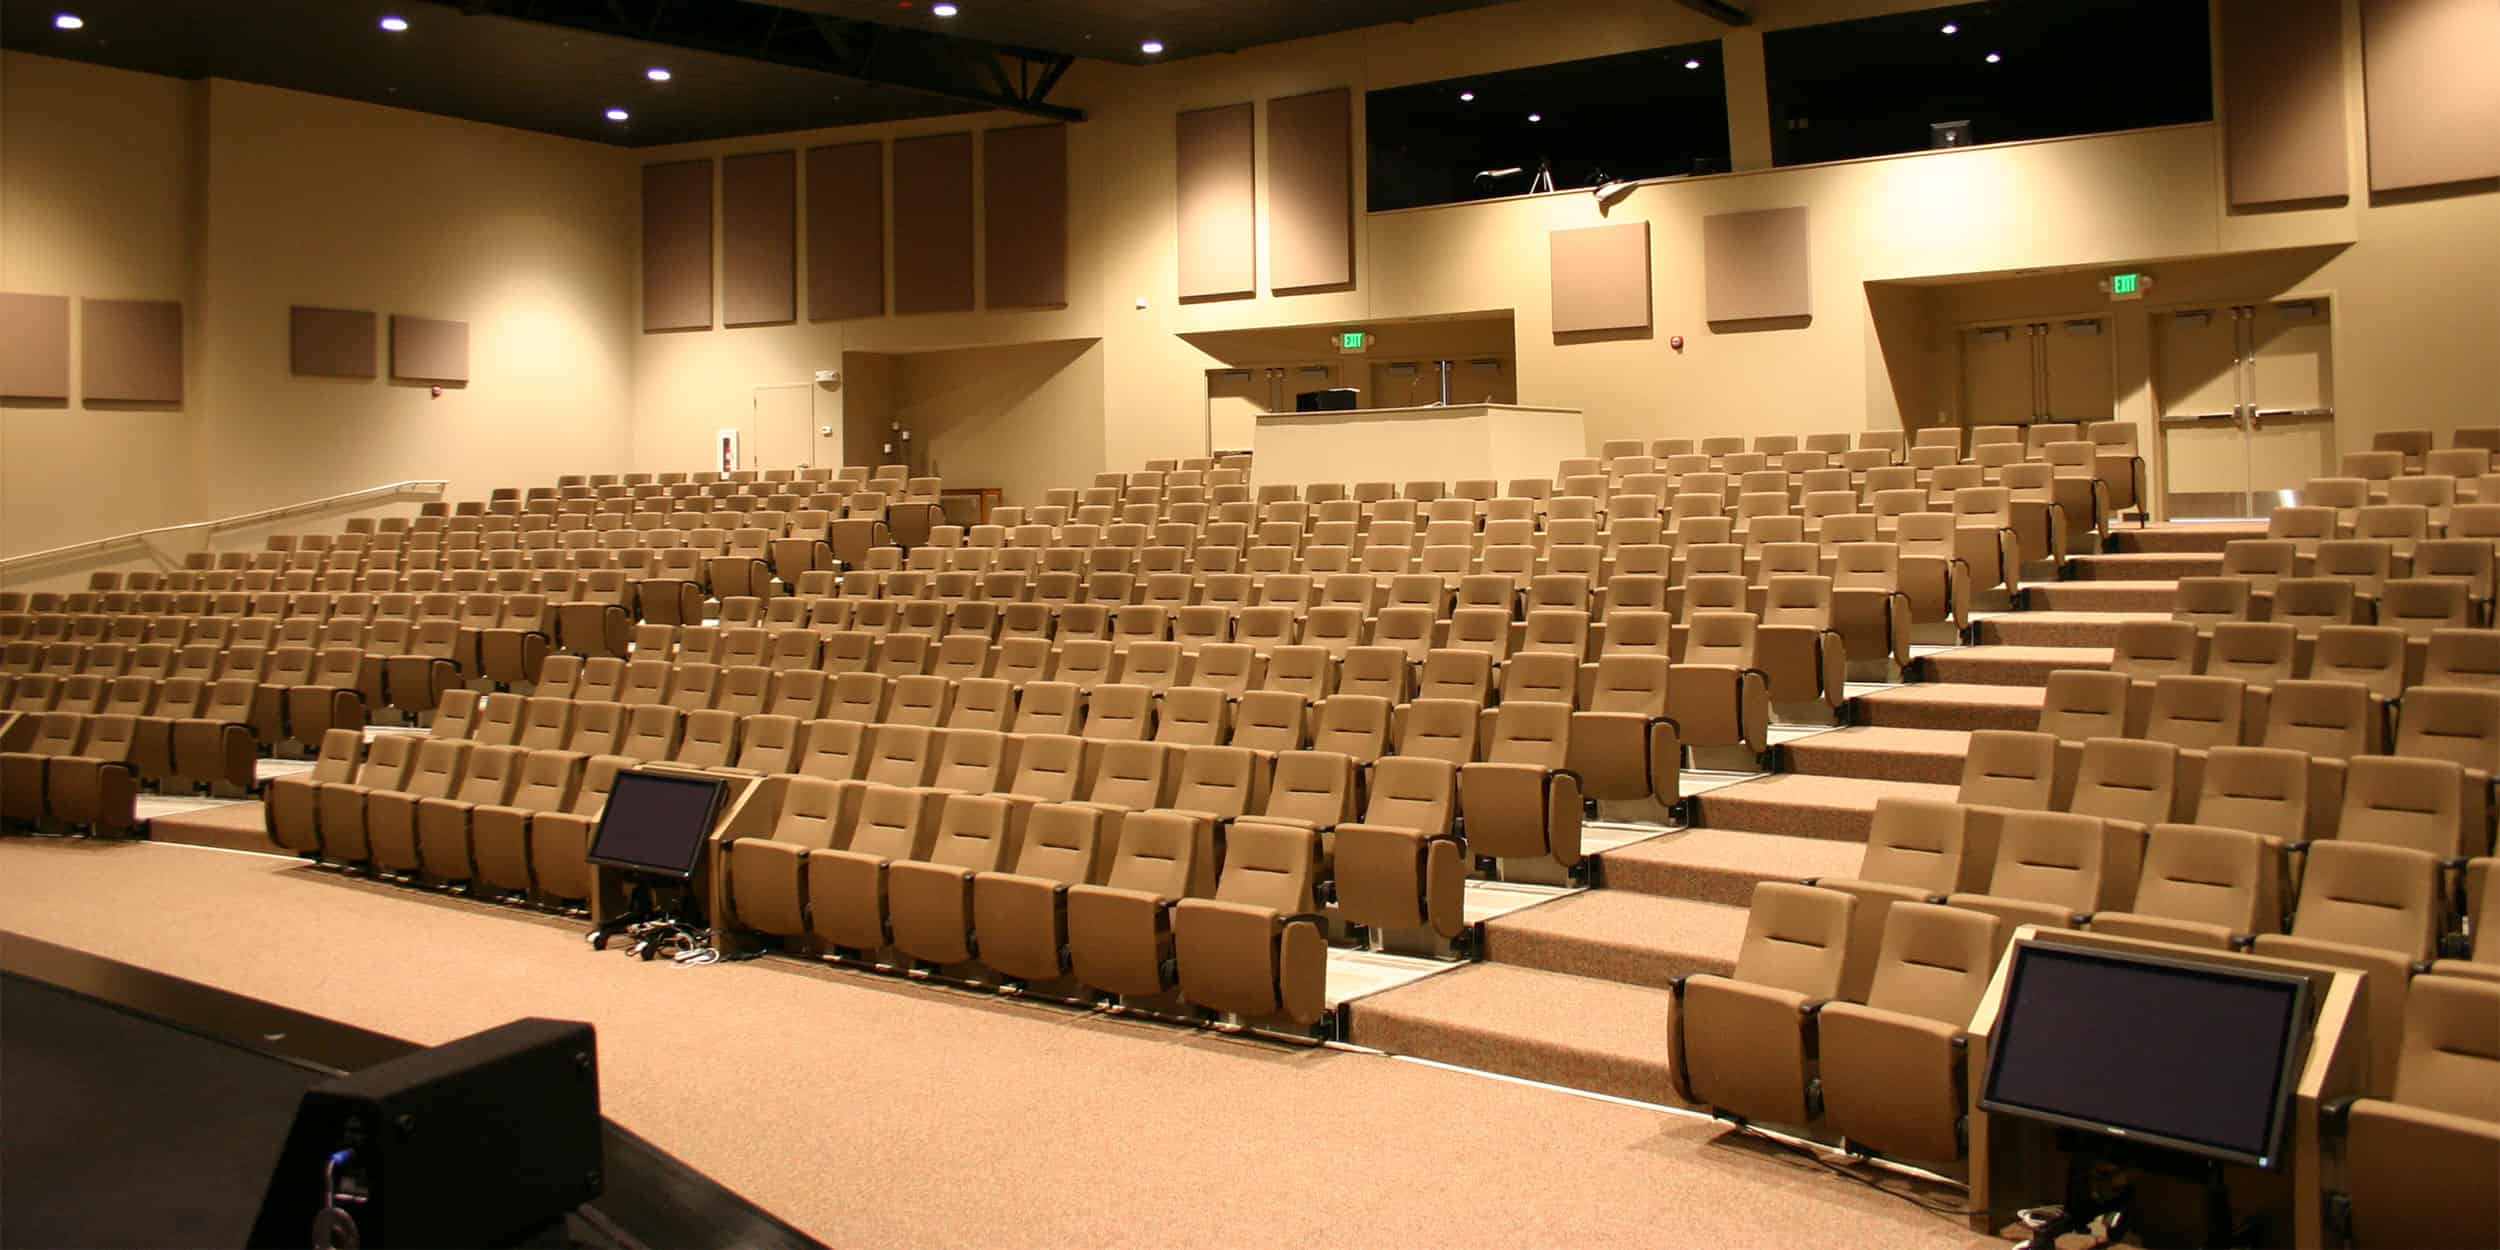 Clarity auditorium chairs inside church